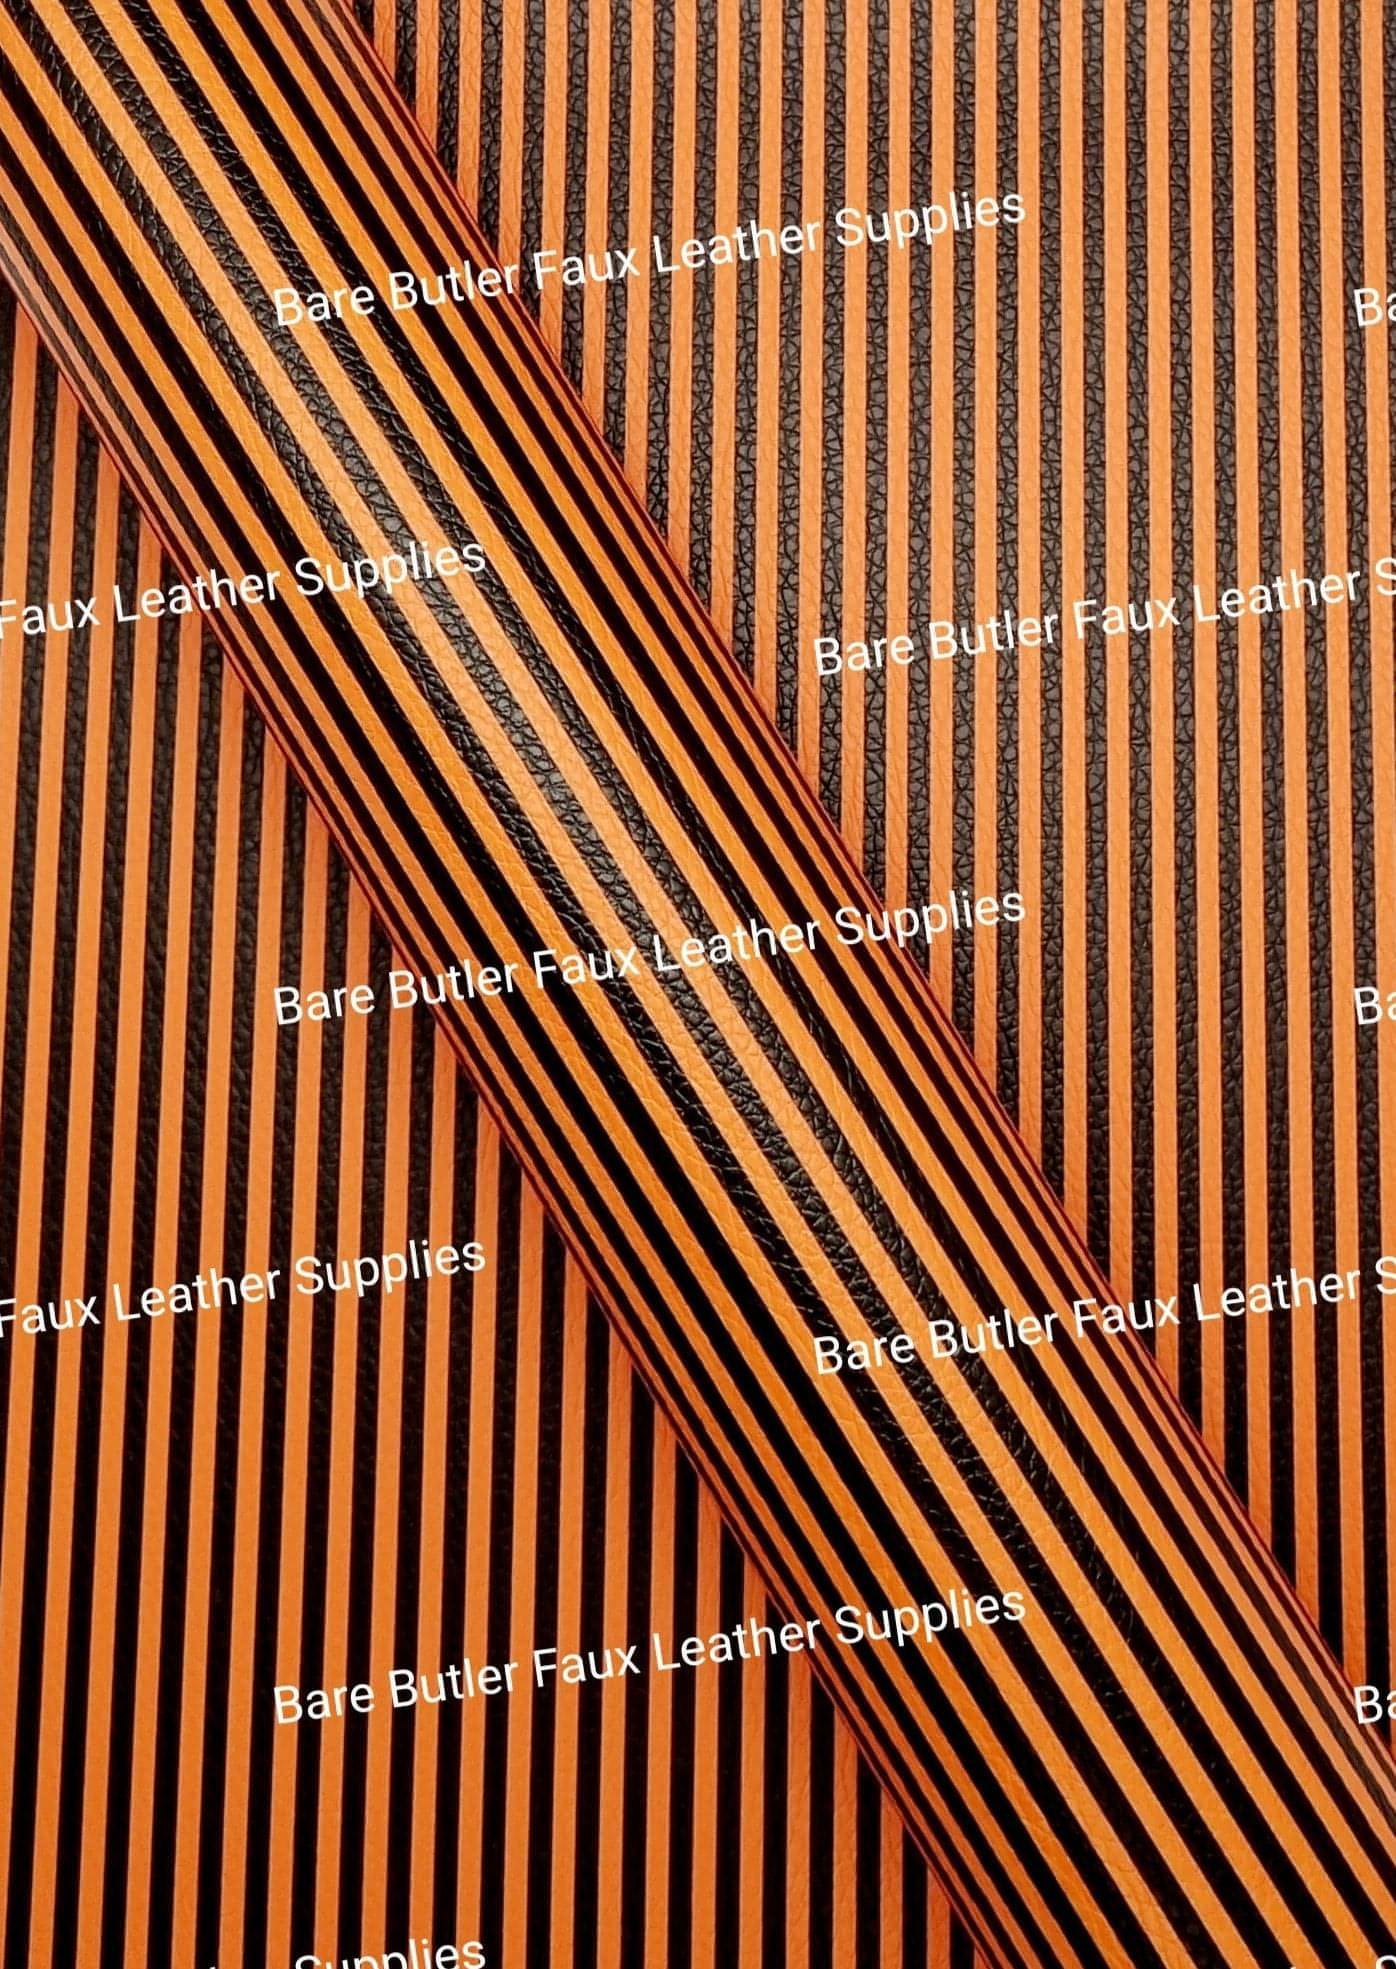 Black & Orange Stripes Litchi - Bare Butler Faux Leather Supplies 